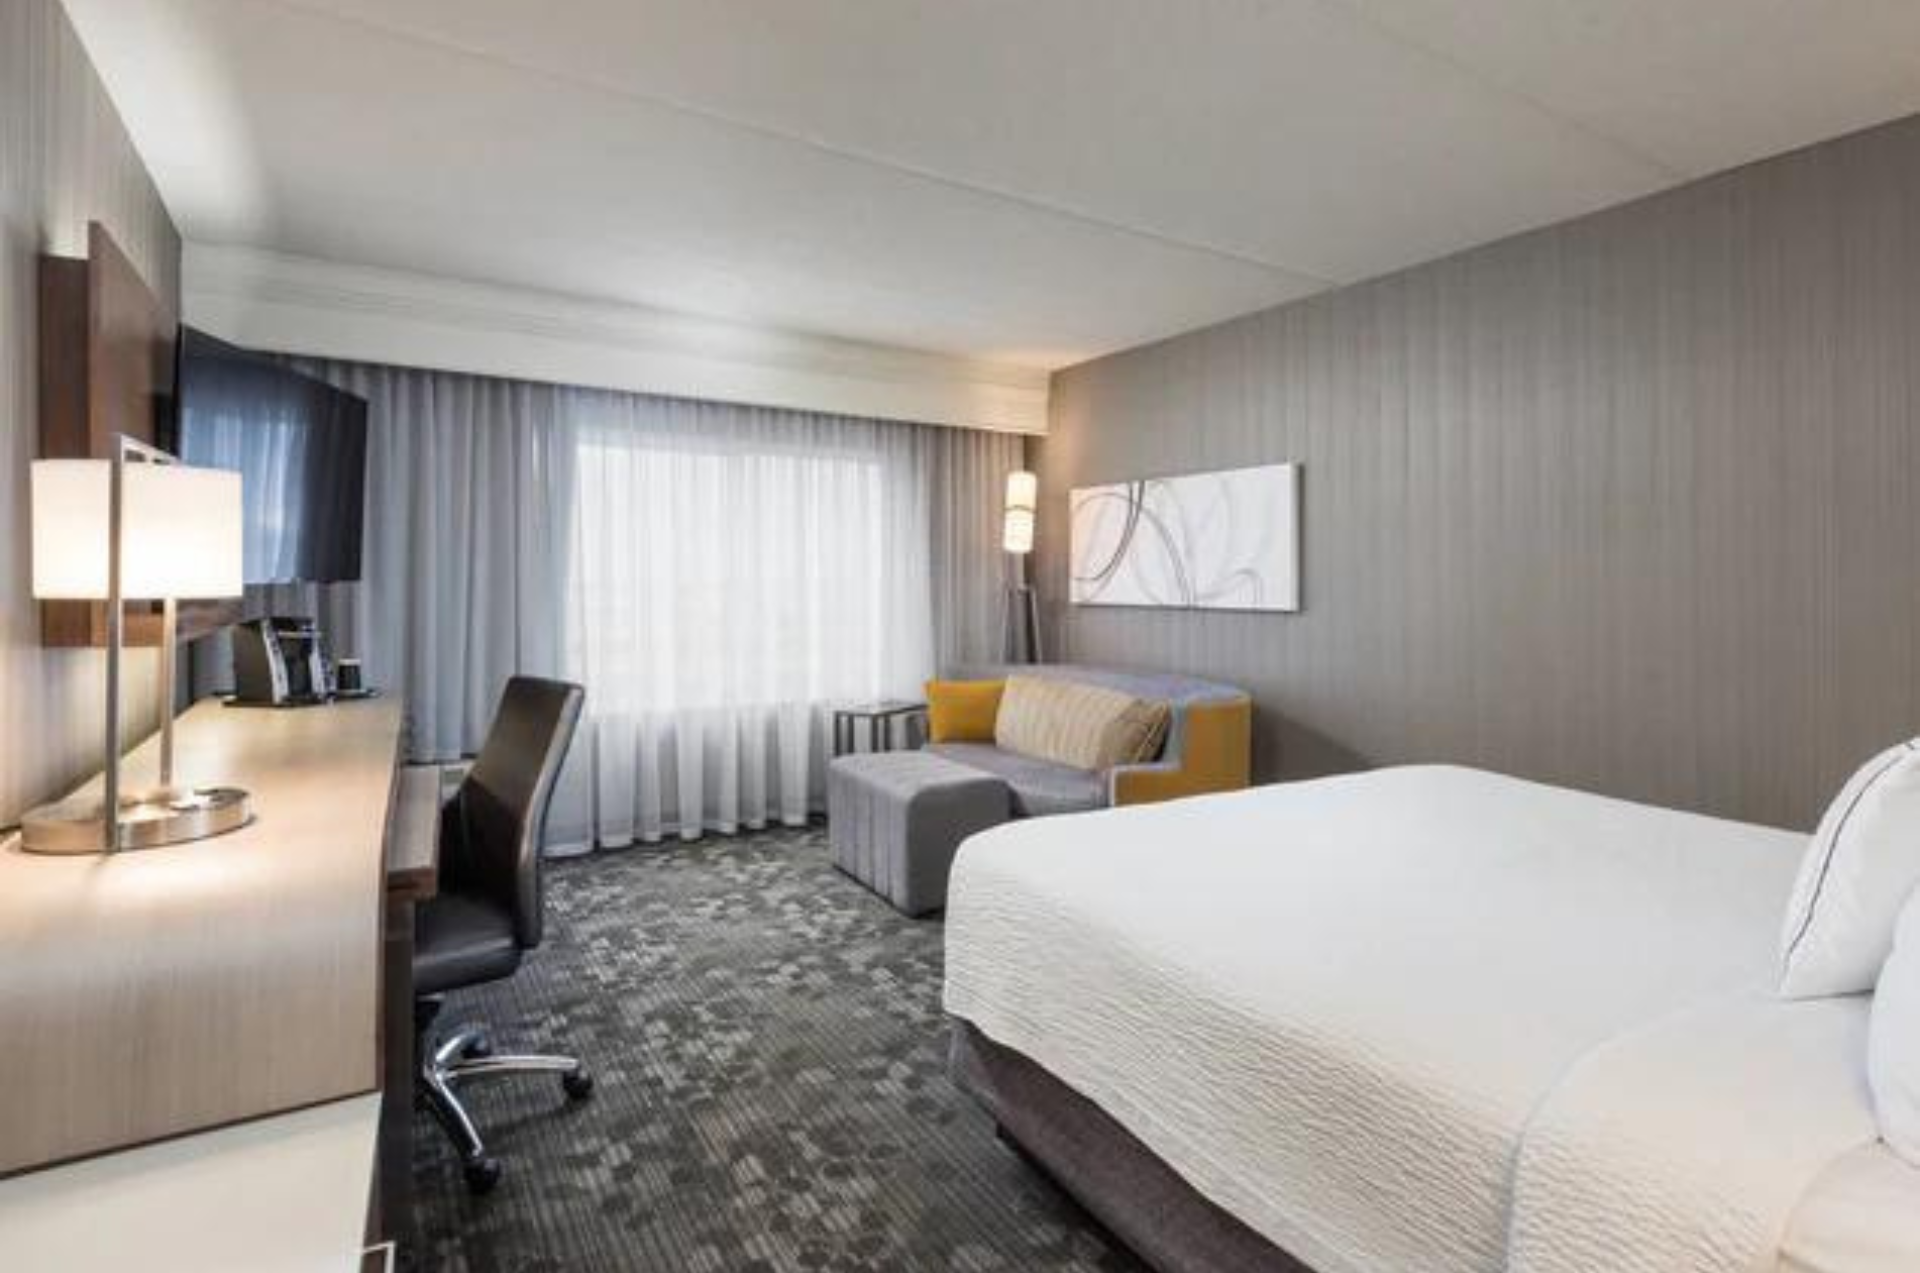 Marriot hotel, king size bedroom with sofa bed / Hôtel Marriot, chambre à coucher king size avec canapé-lit